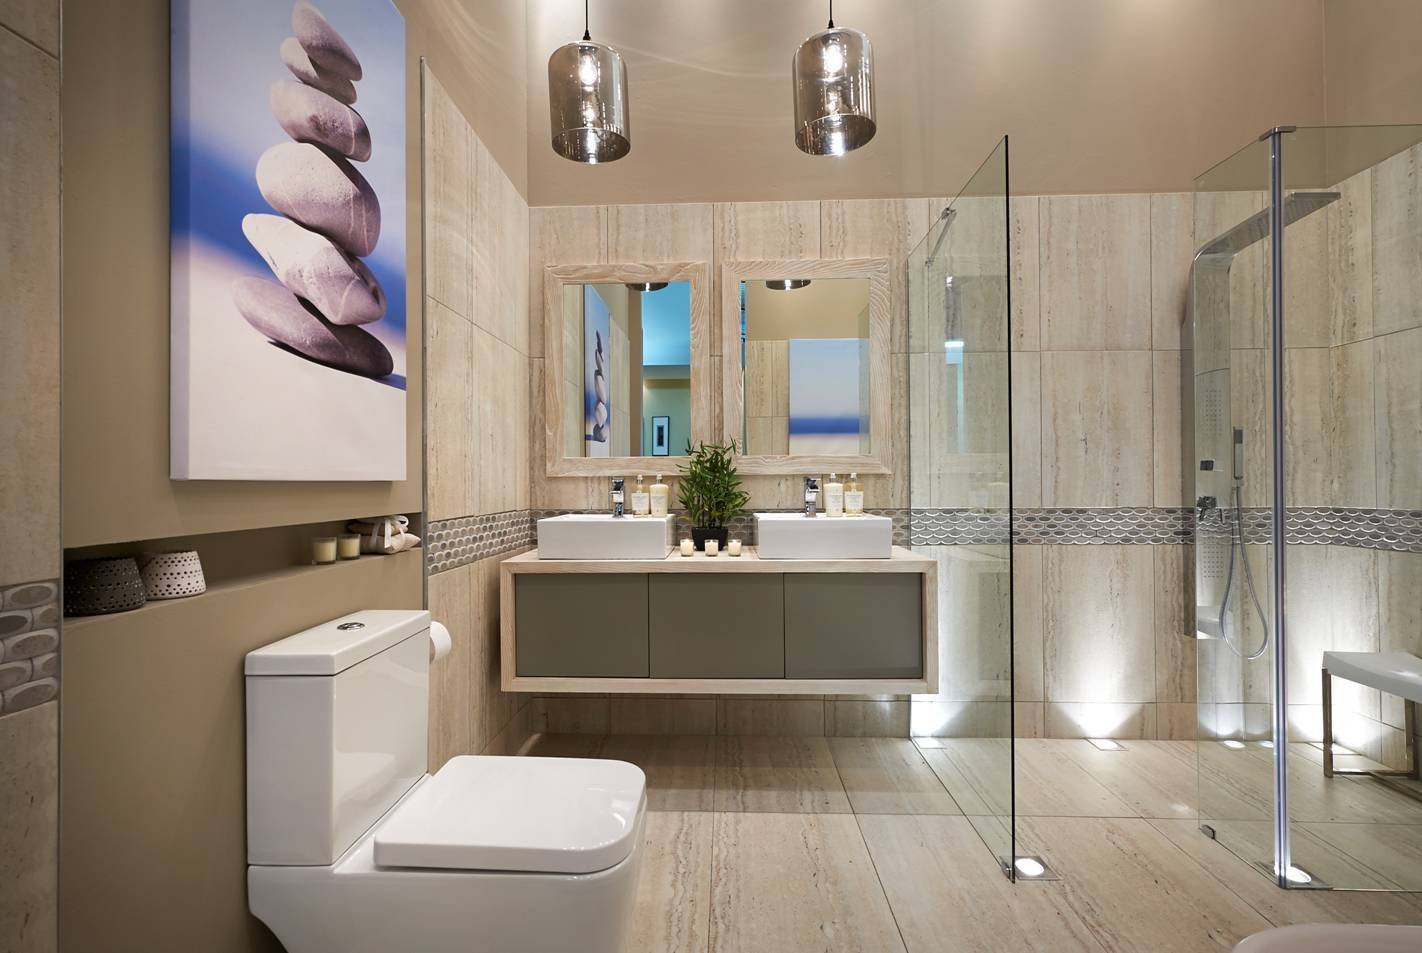 Ванная комната - дешево и красиво своими руками: дизайн, фото